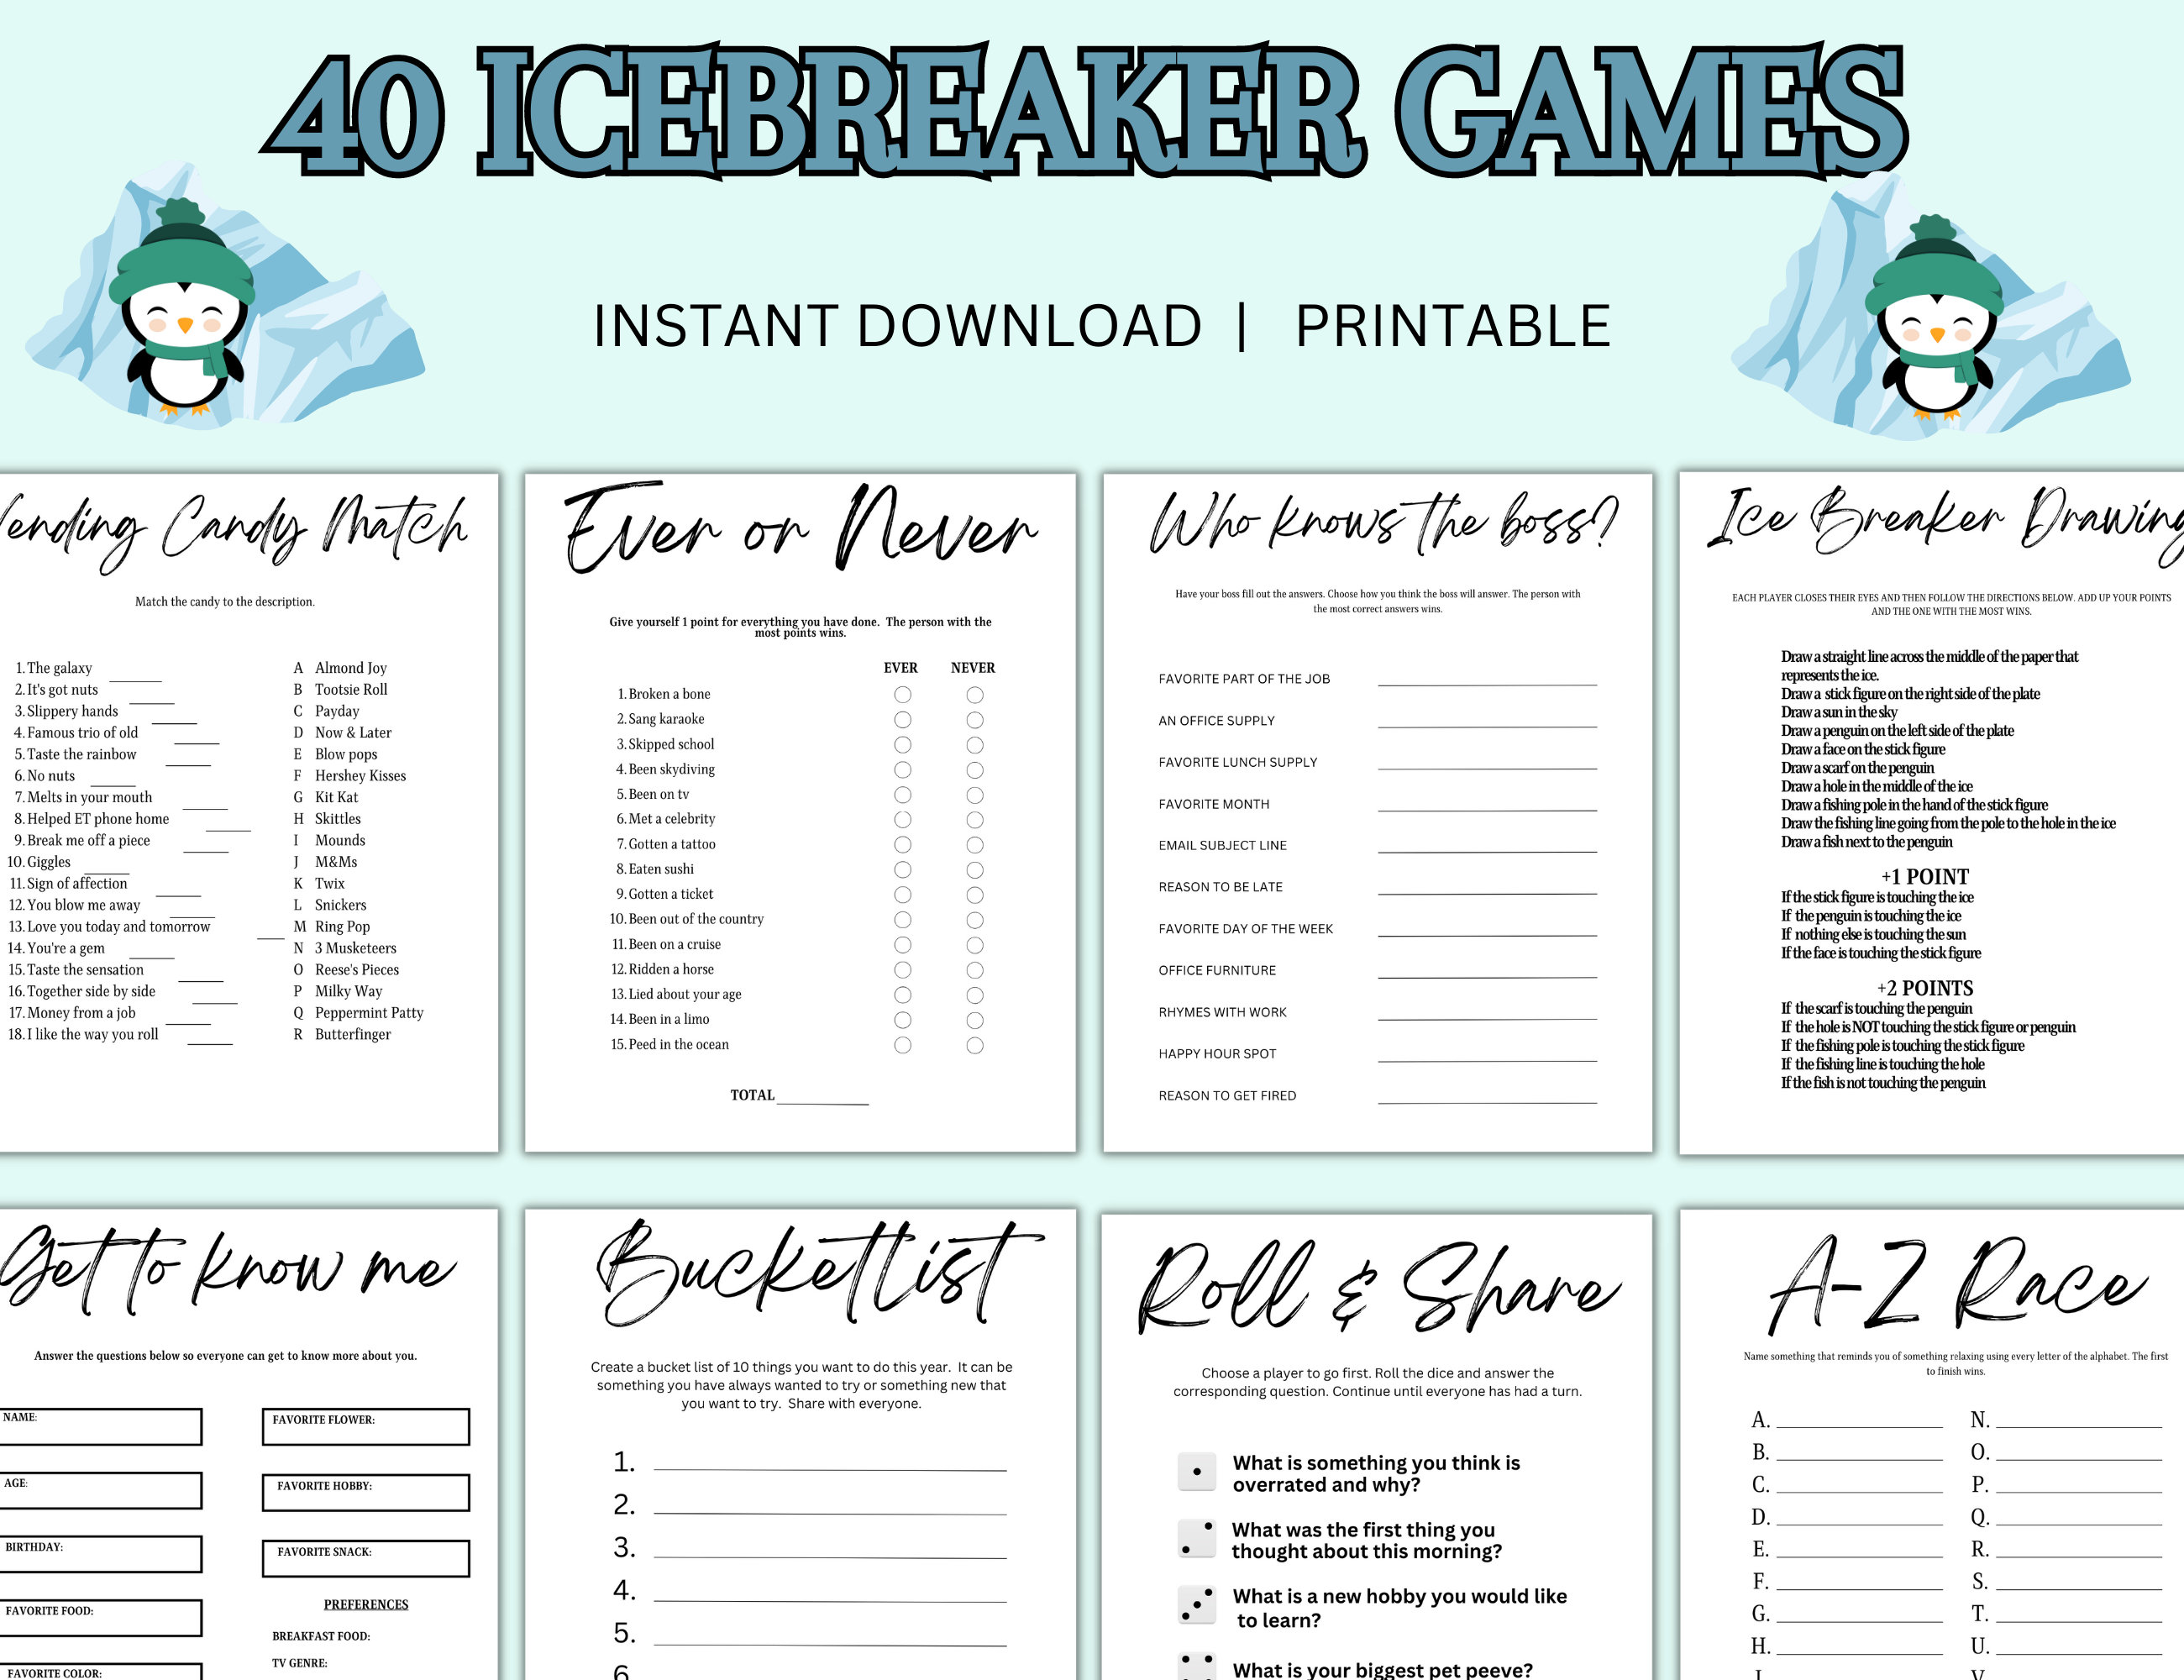 16 Perfect Icebreaker Games for Couples - IcebreakerIdeas